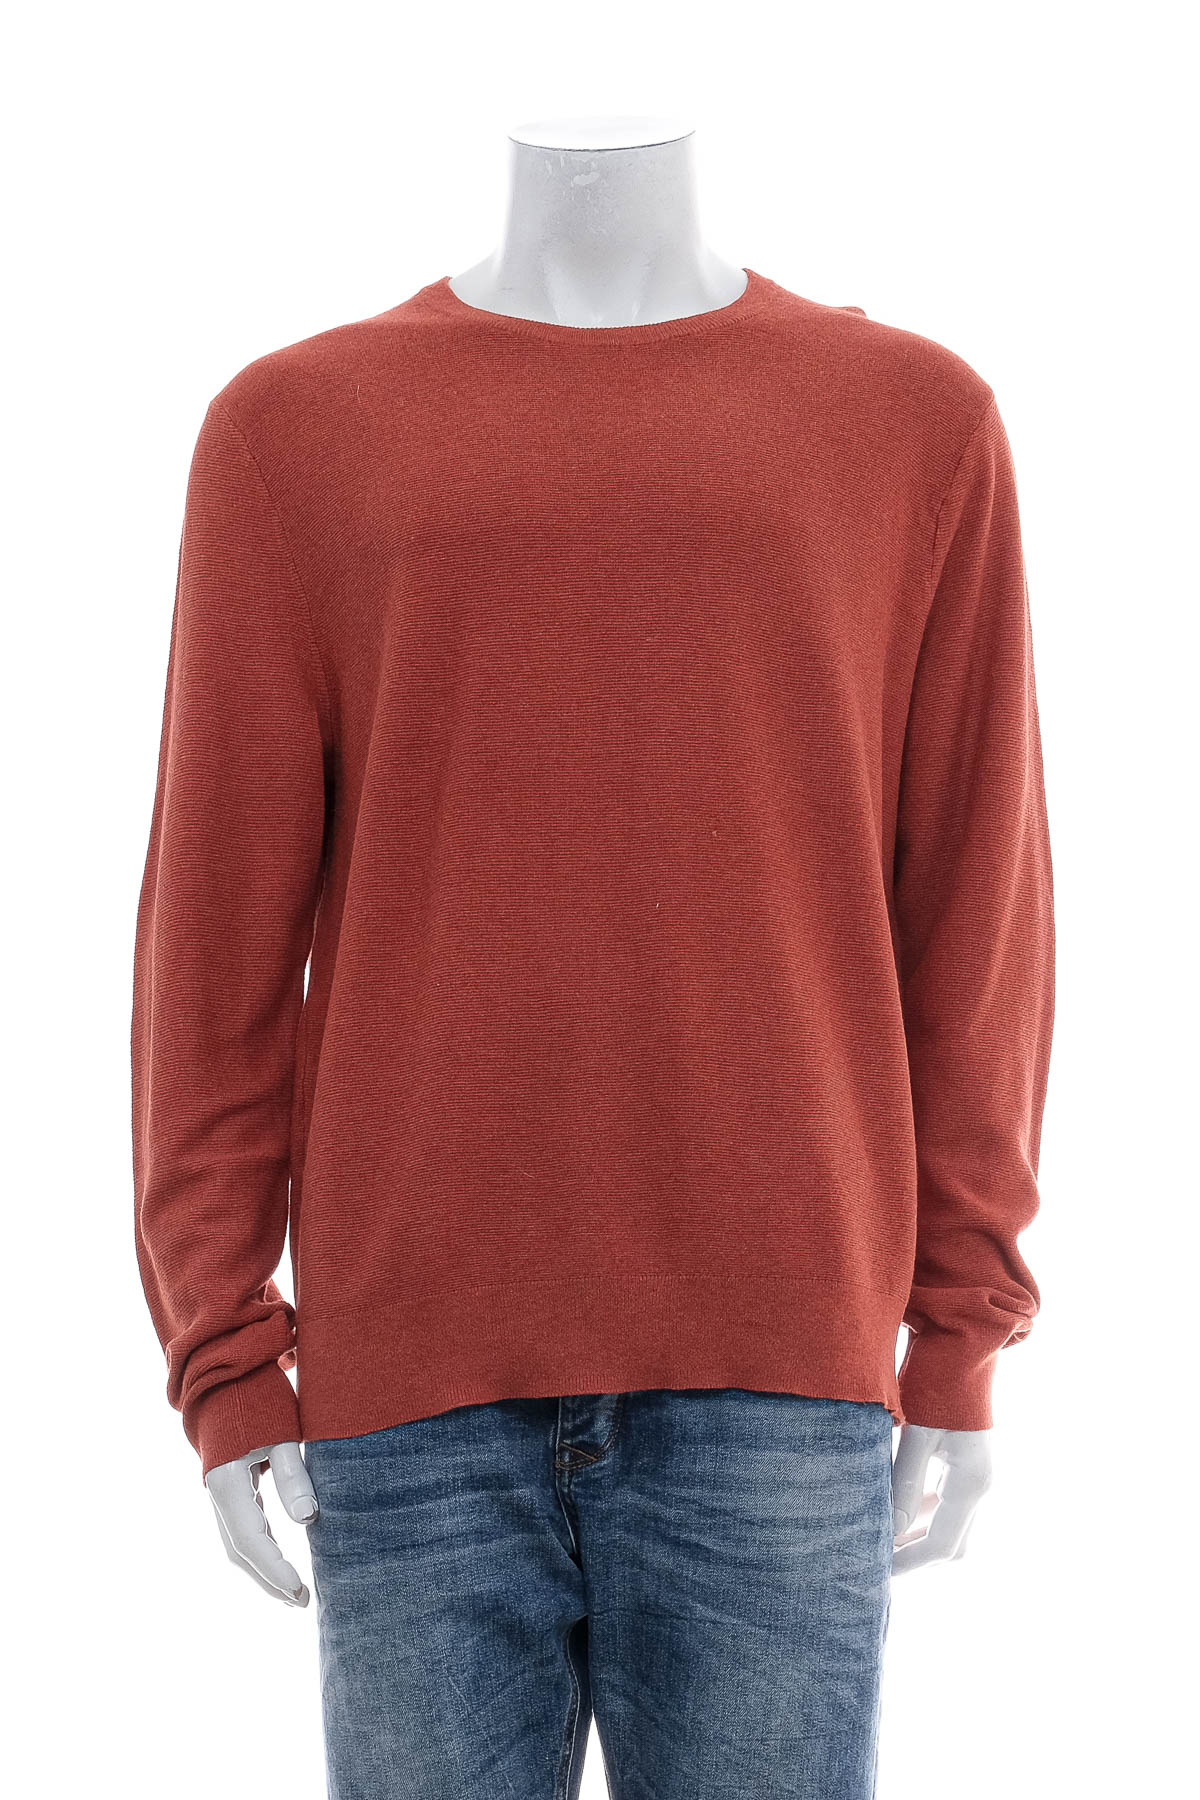 Men's sweater - J.CREW - 0